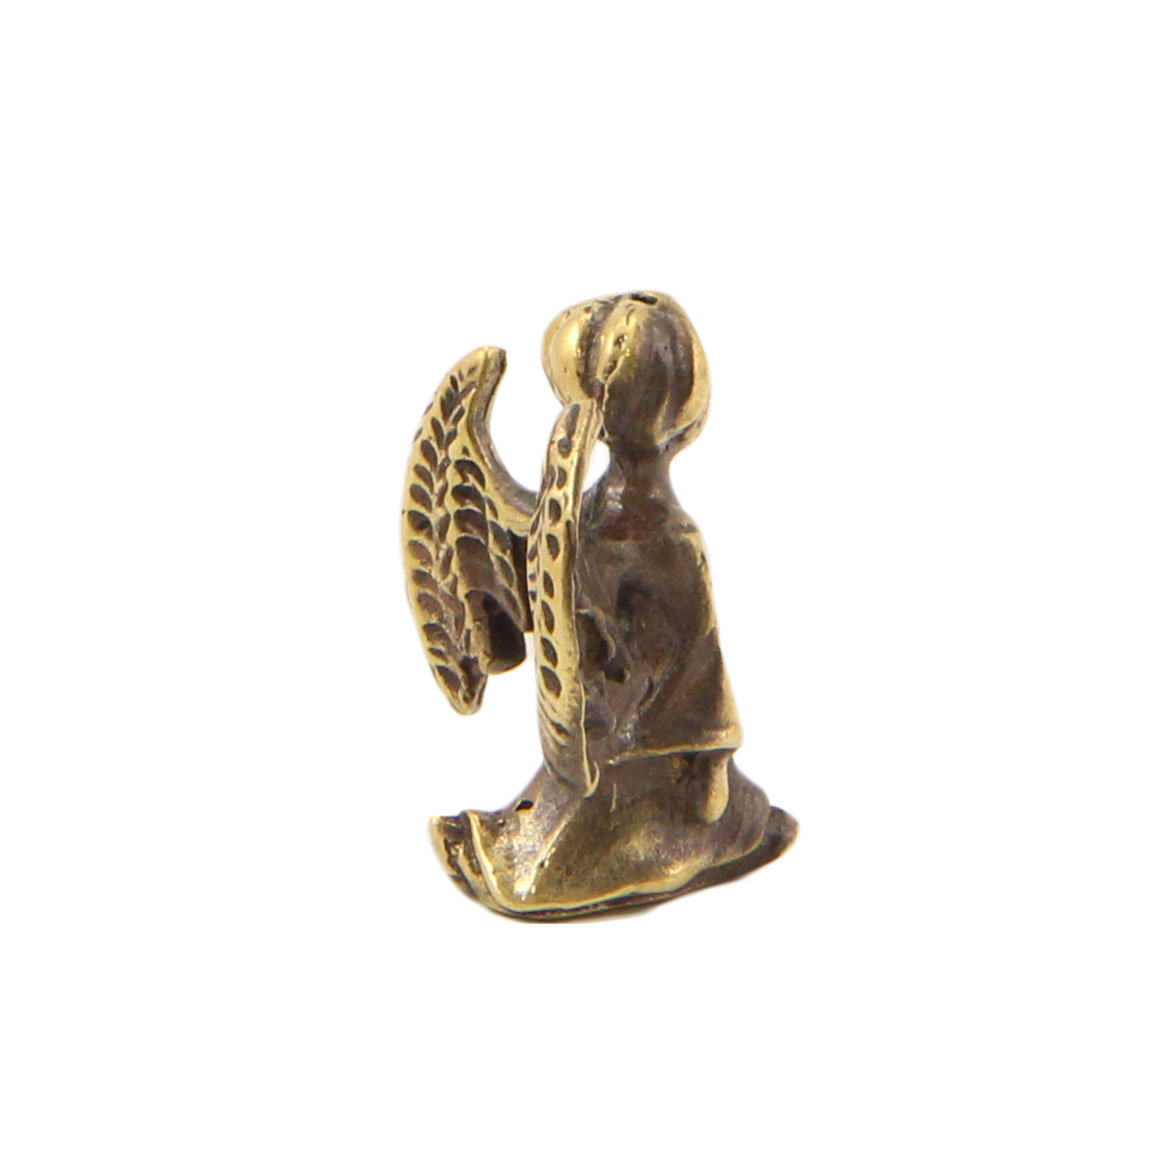 Бронзовый сувенир Ангел безликий малыйФото 15455-04.jpg